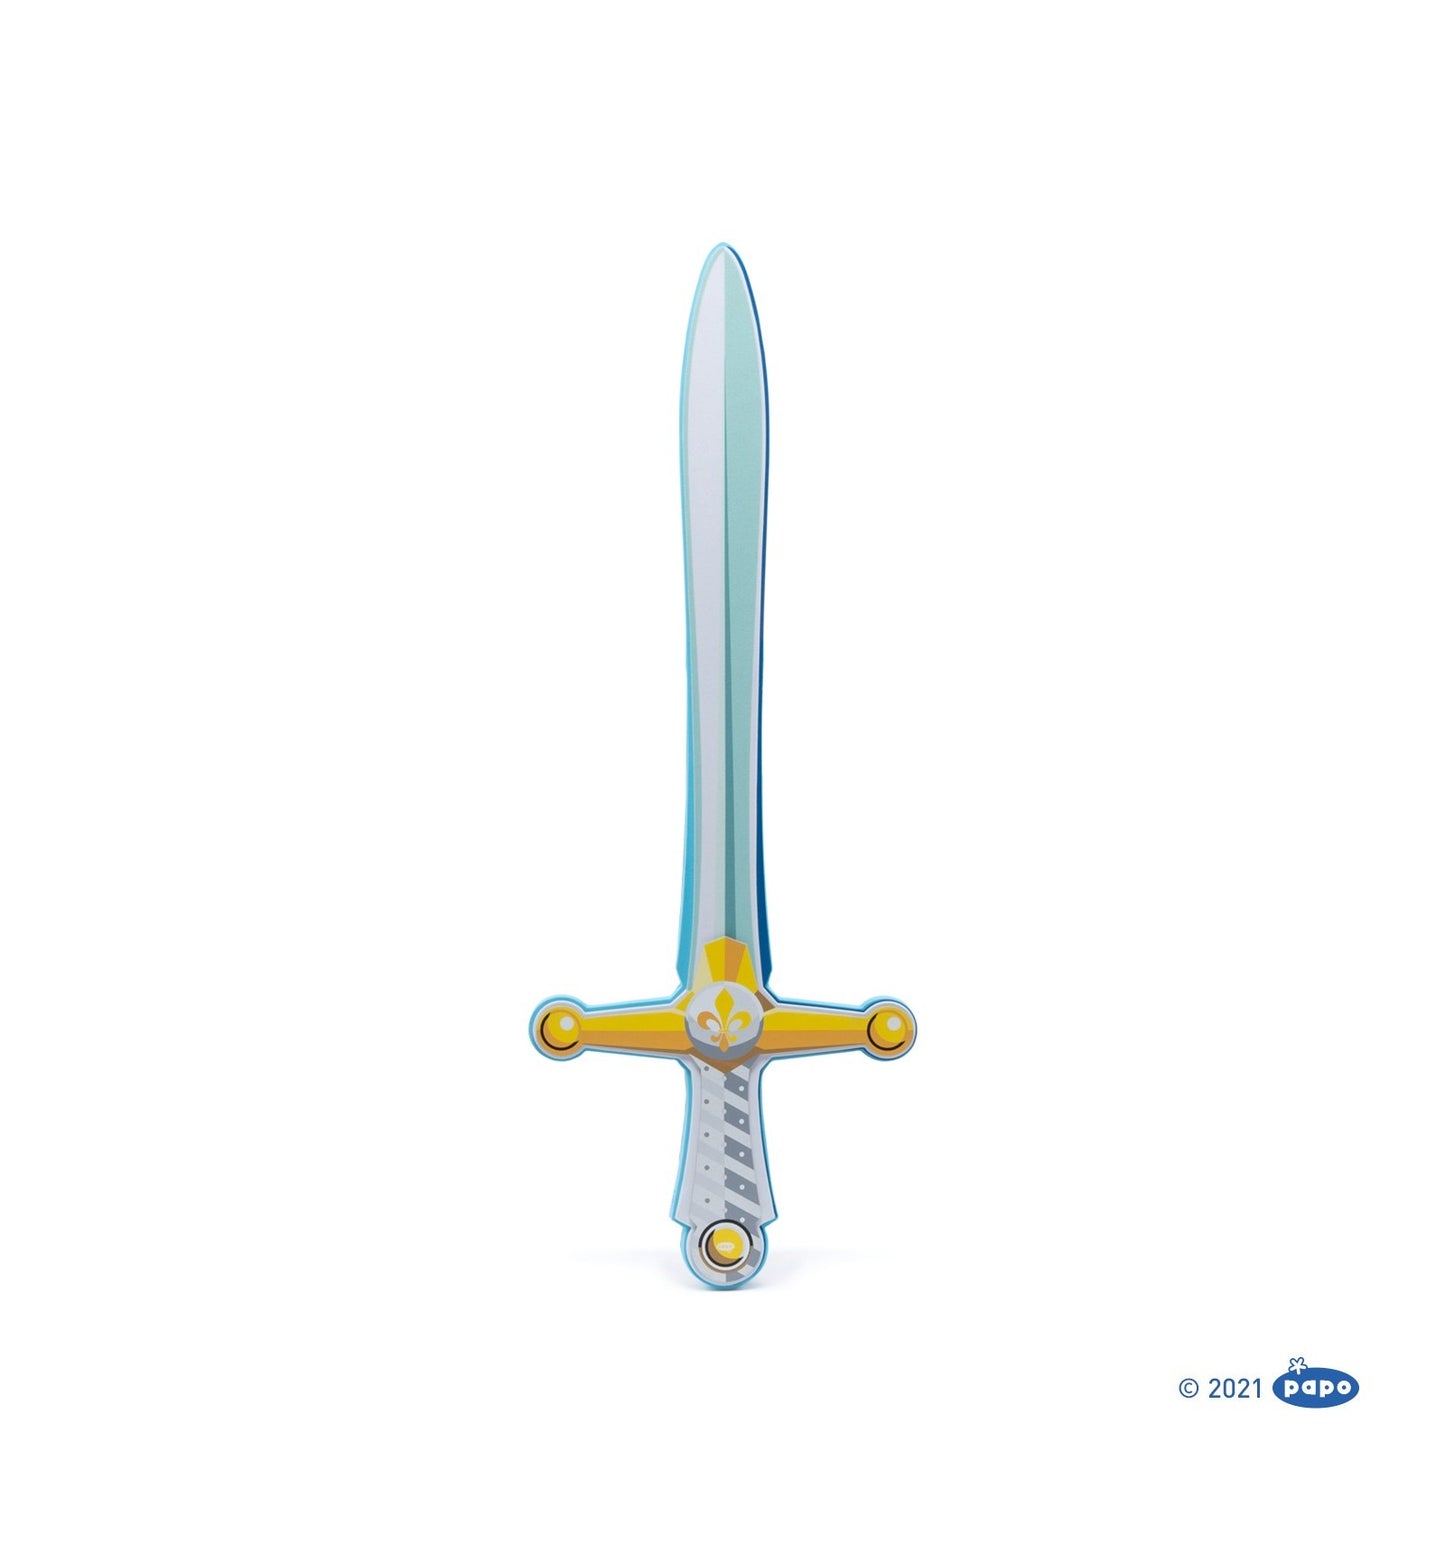 lily flower sword